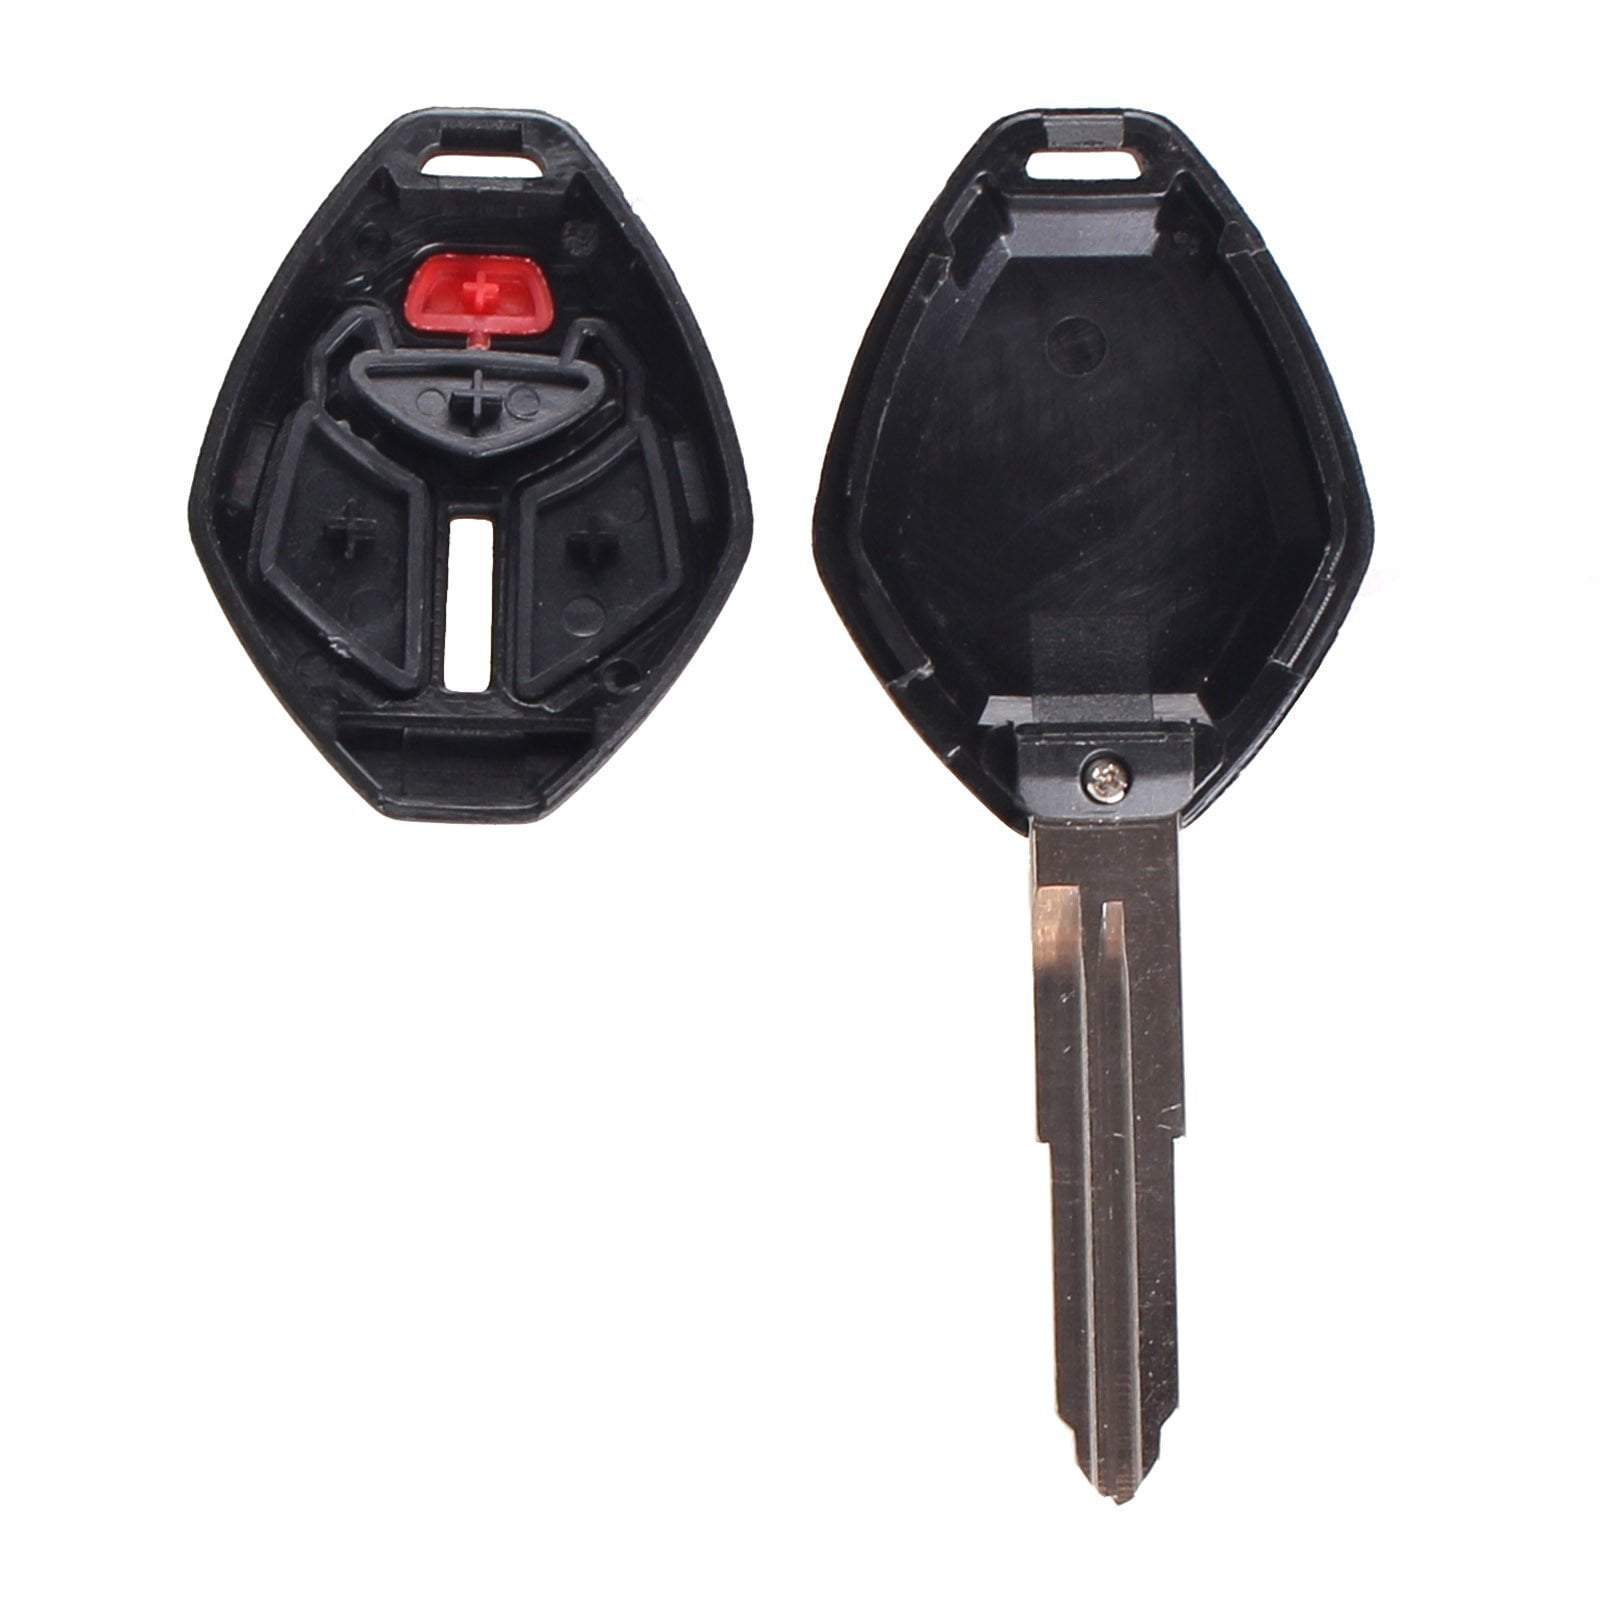 Fekete színű, 3 gombos Mitsubishi kulcs, kulcsház belseje